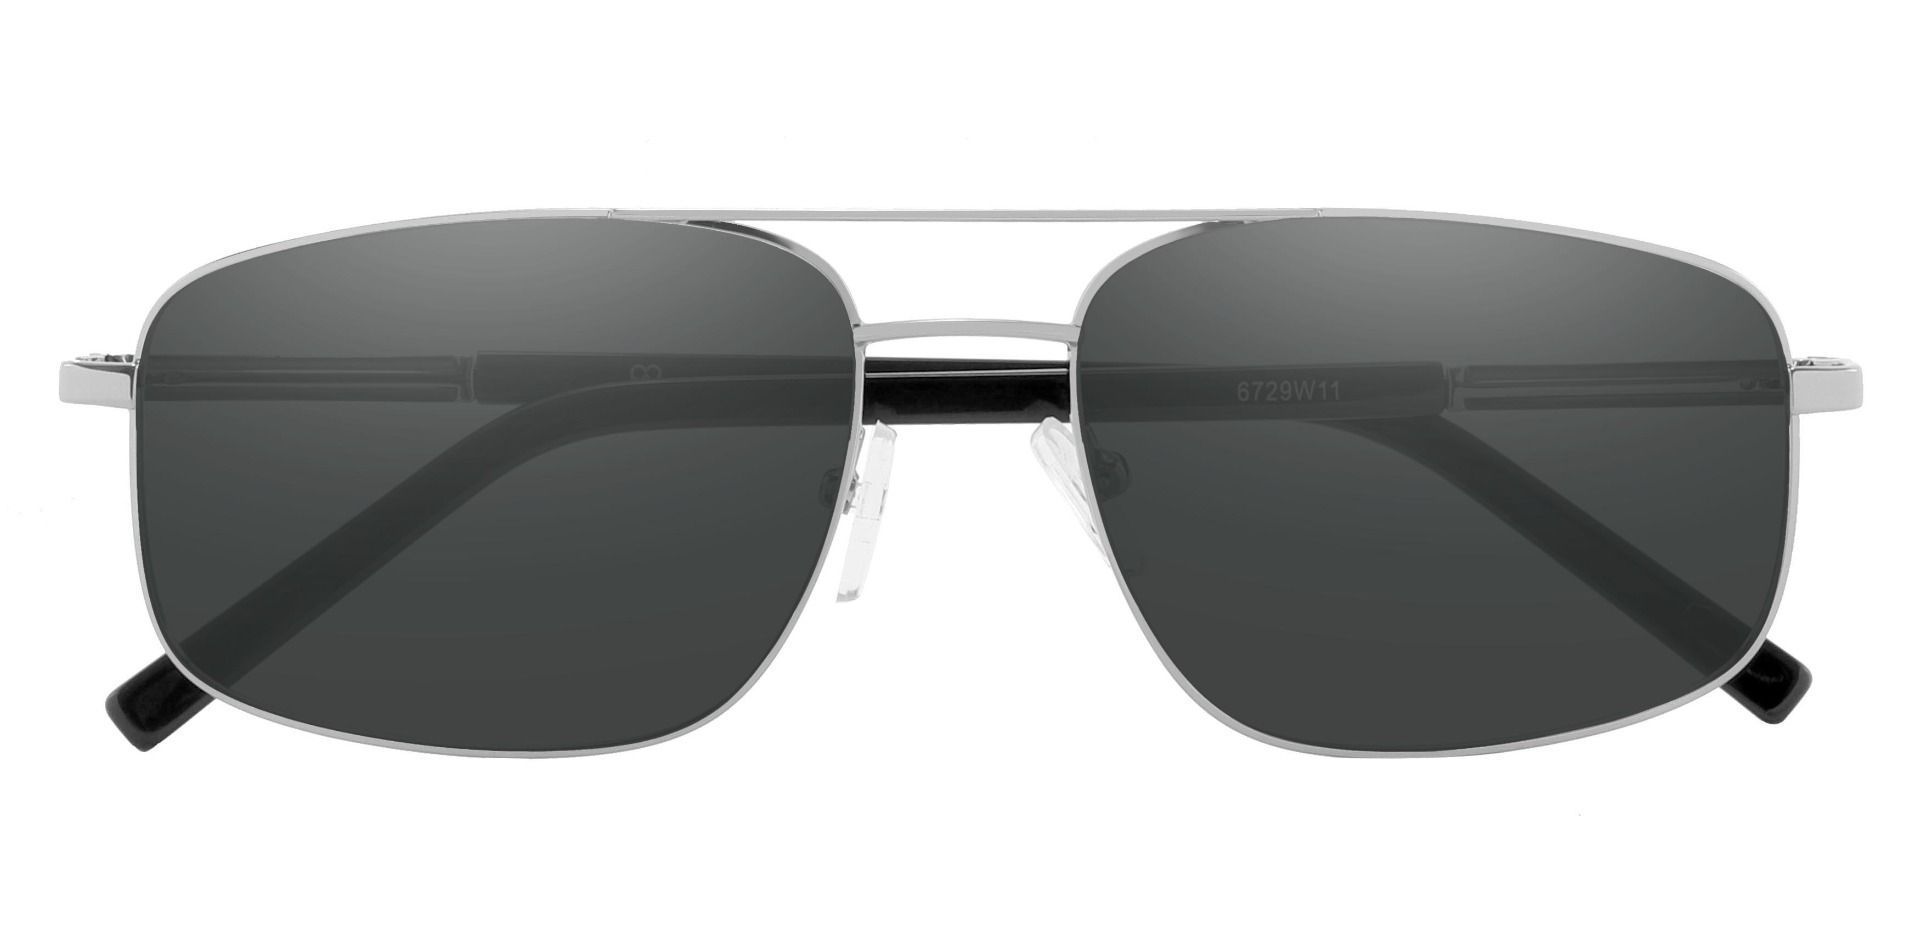 Davenport Aviator Reading Sunglasses - Silver Frame With Gray Lenses